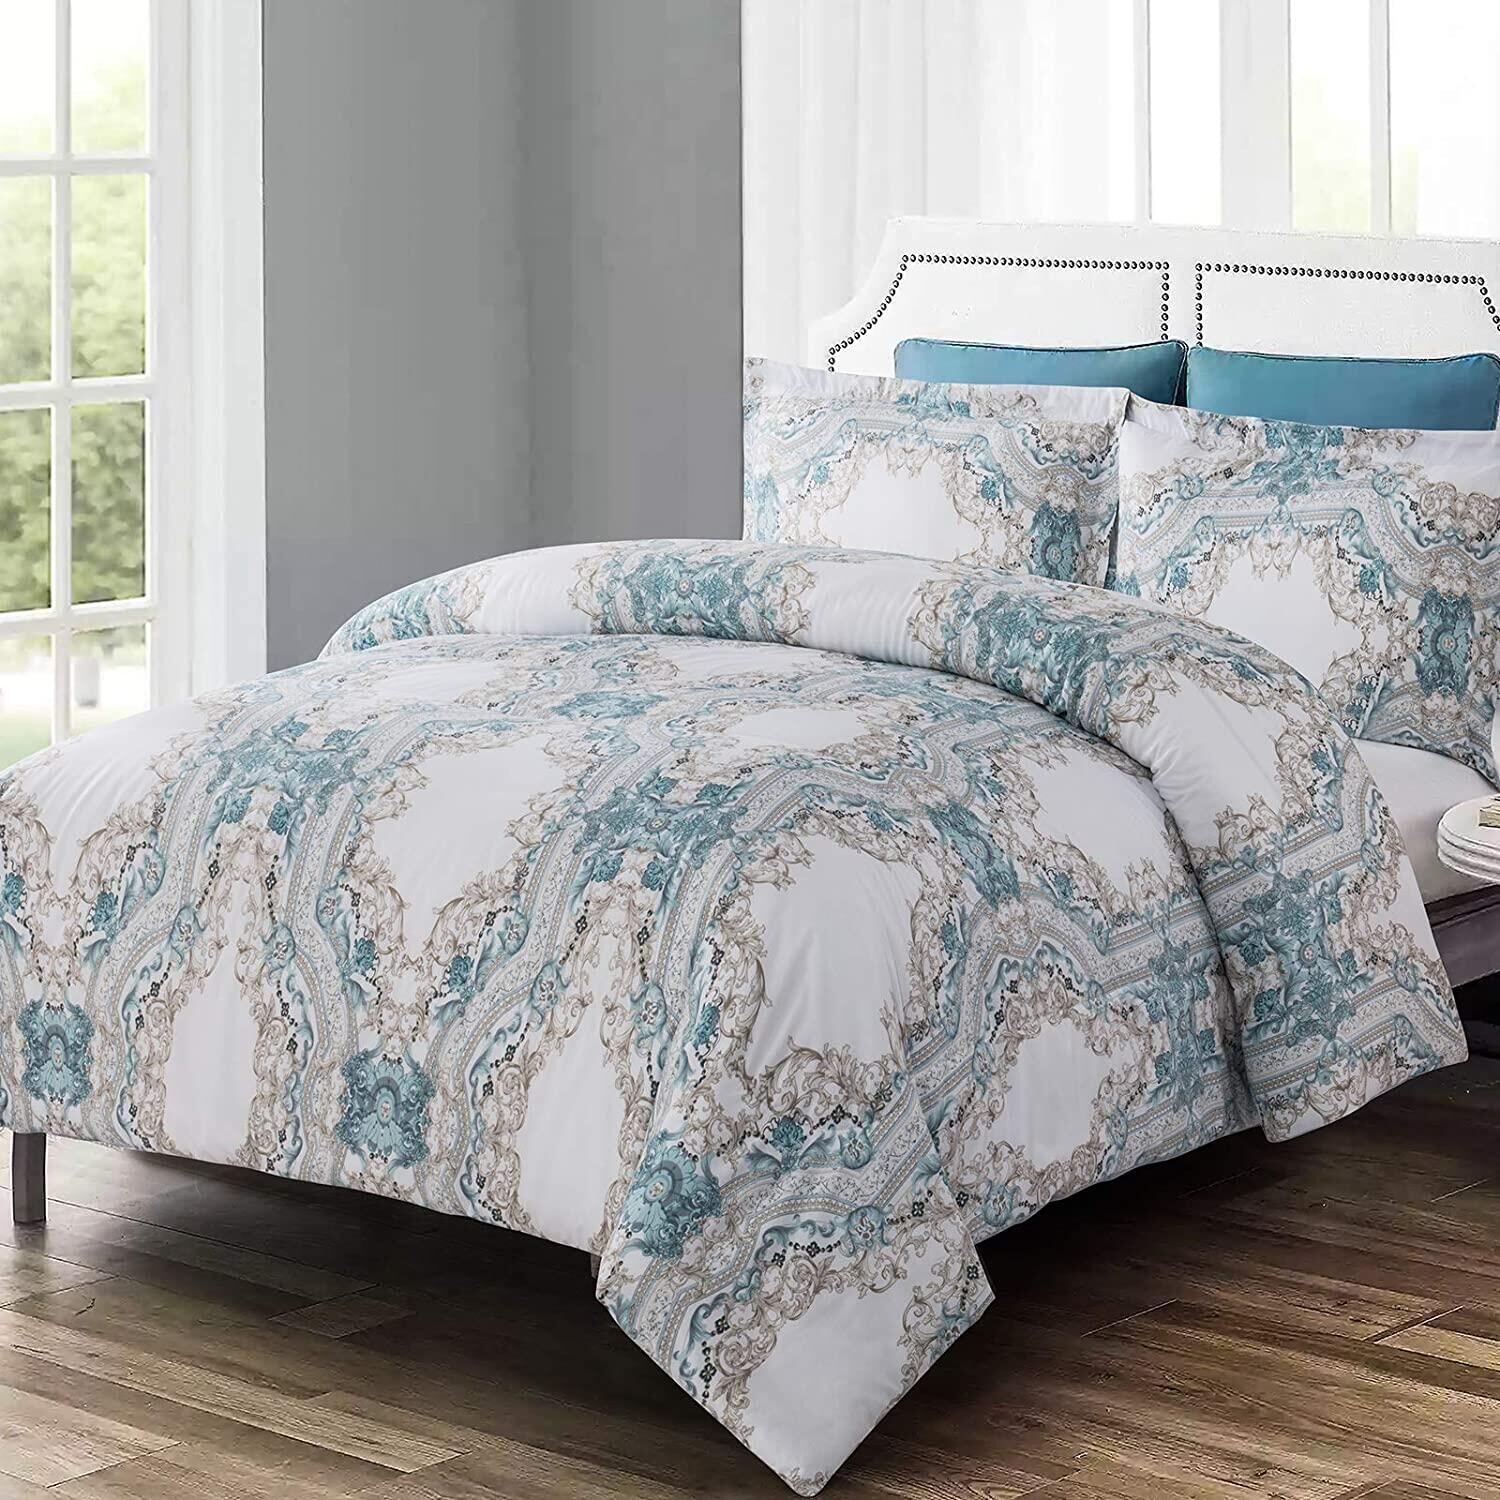 Shatex Twin Comforter 2 Pieces Luxury Bedding  Comforter Set– Ultra Soft 100% Microfiber Polyester被子两件套